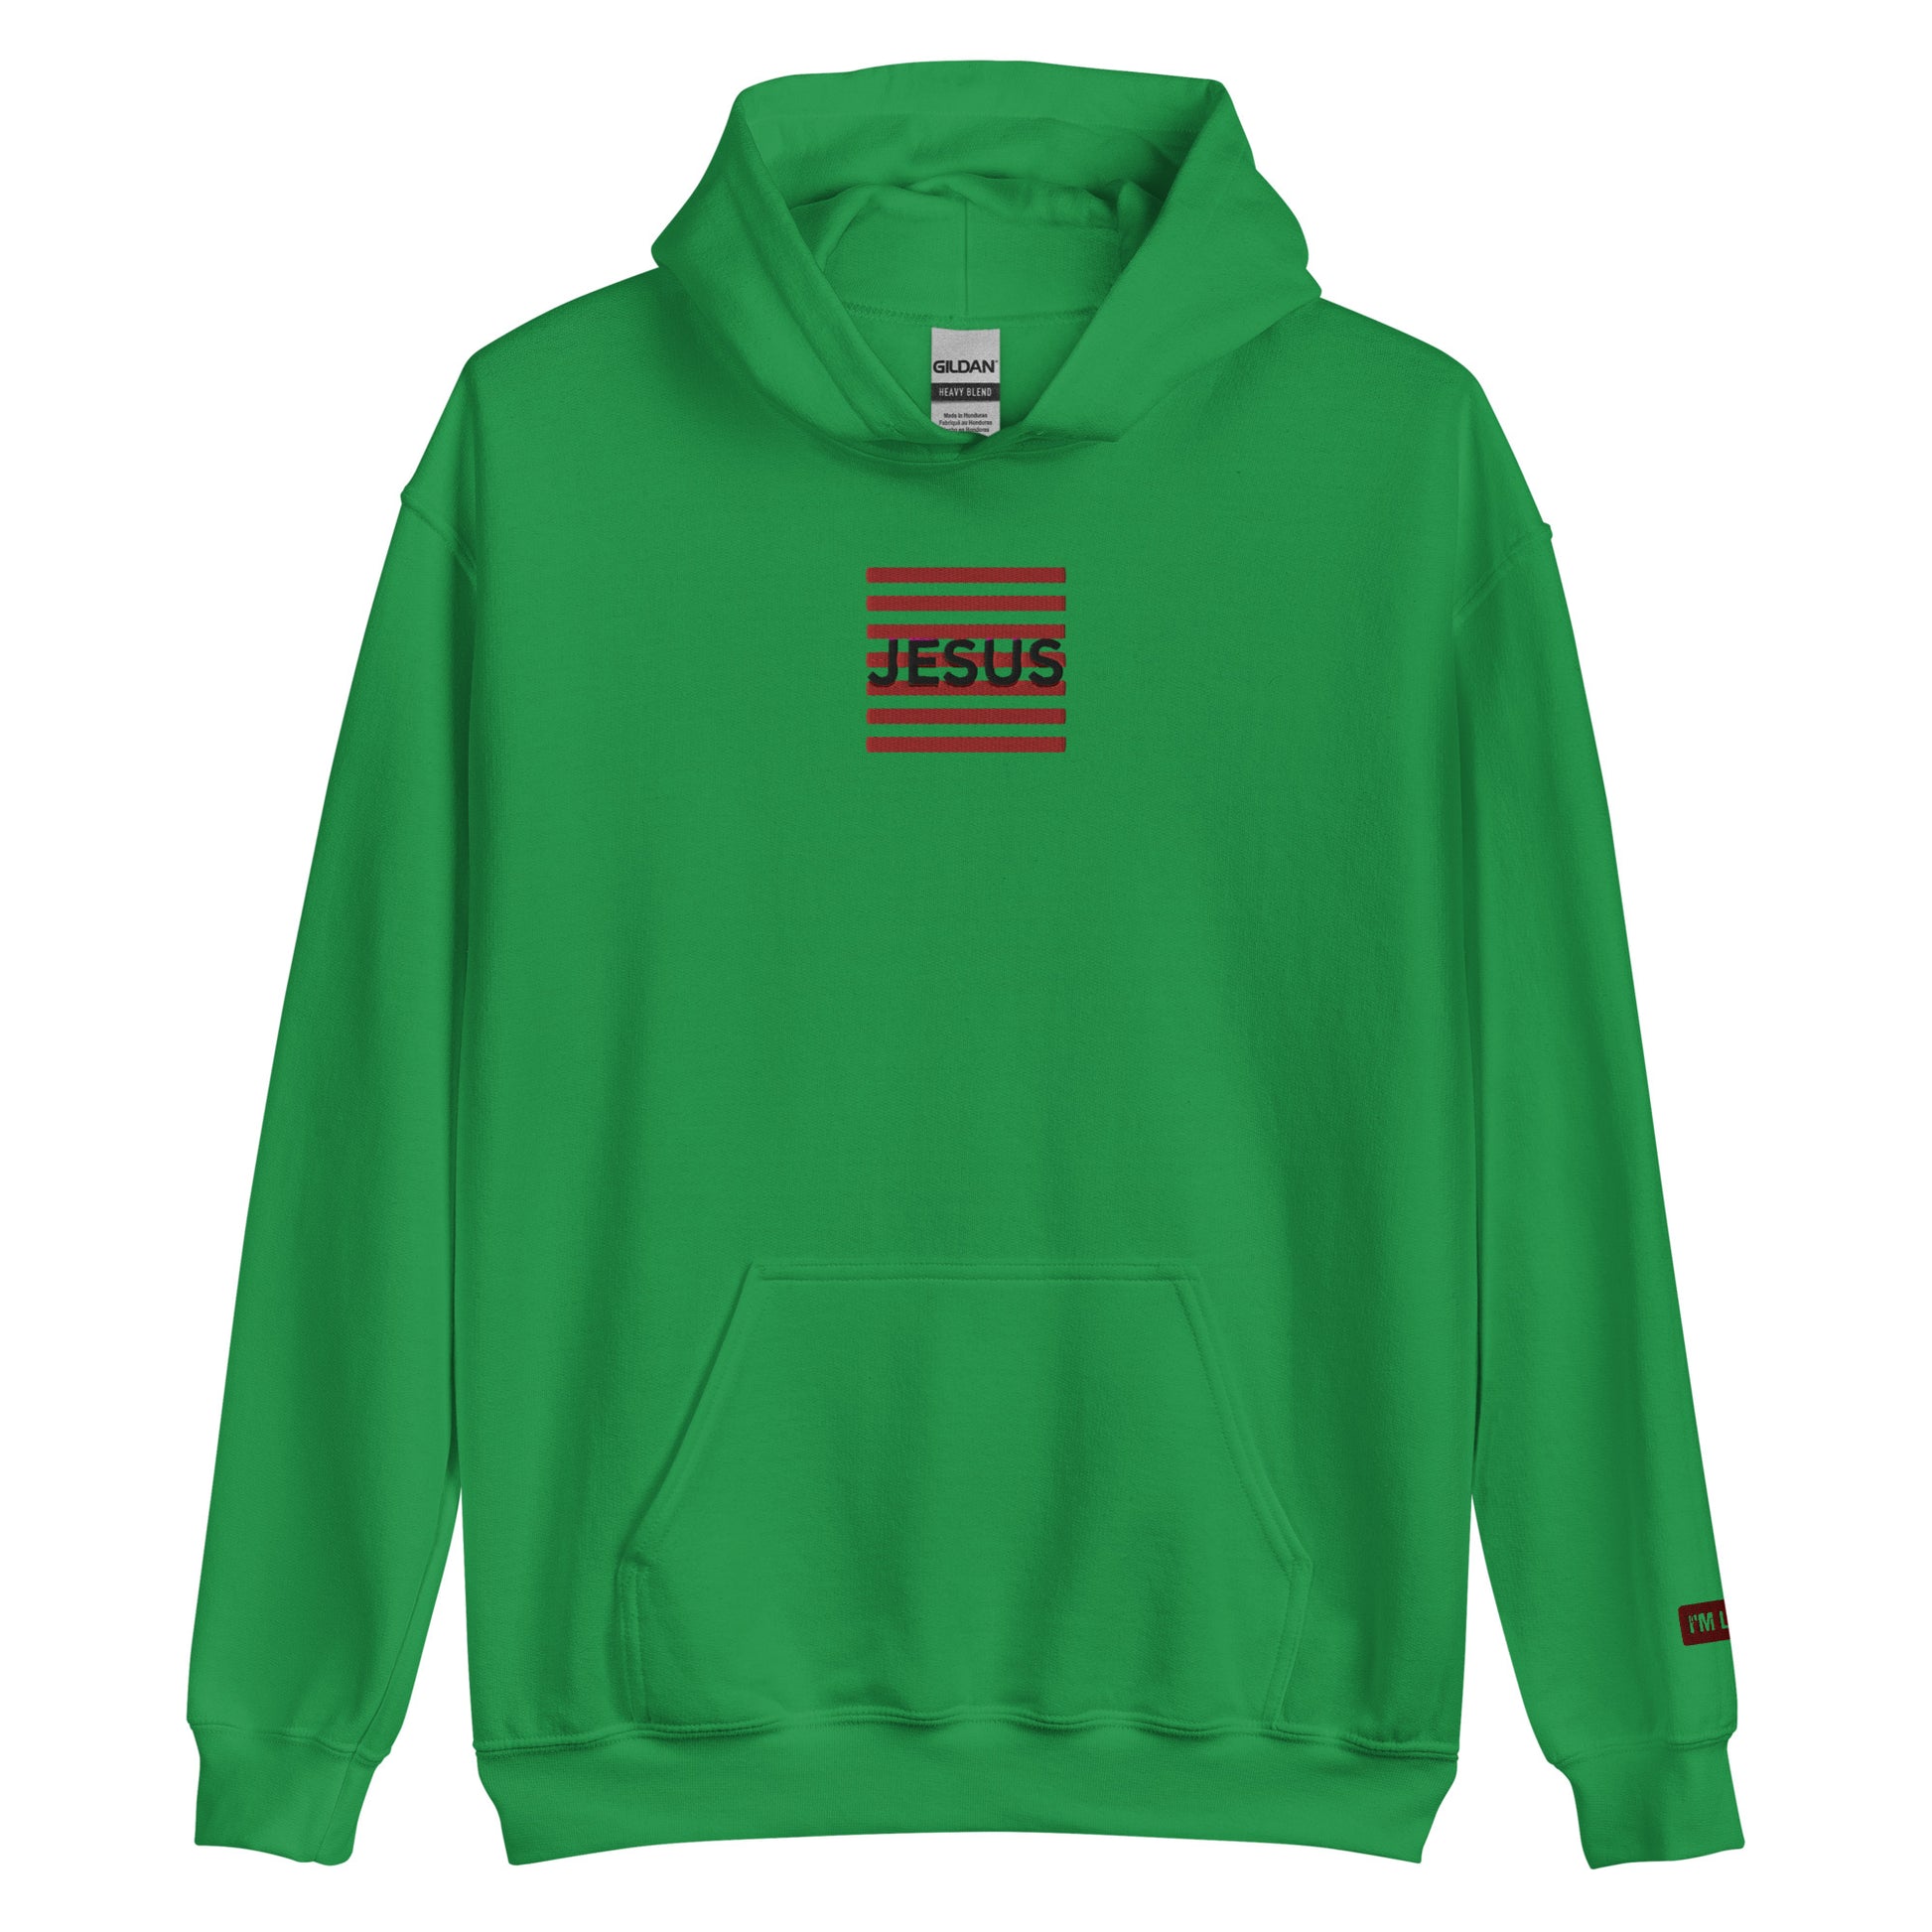 Jesus Embroidery Unisex Hoodie - Irish Green / S